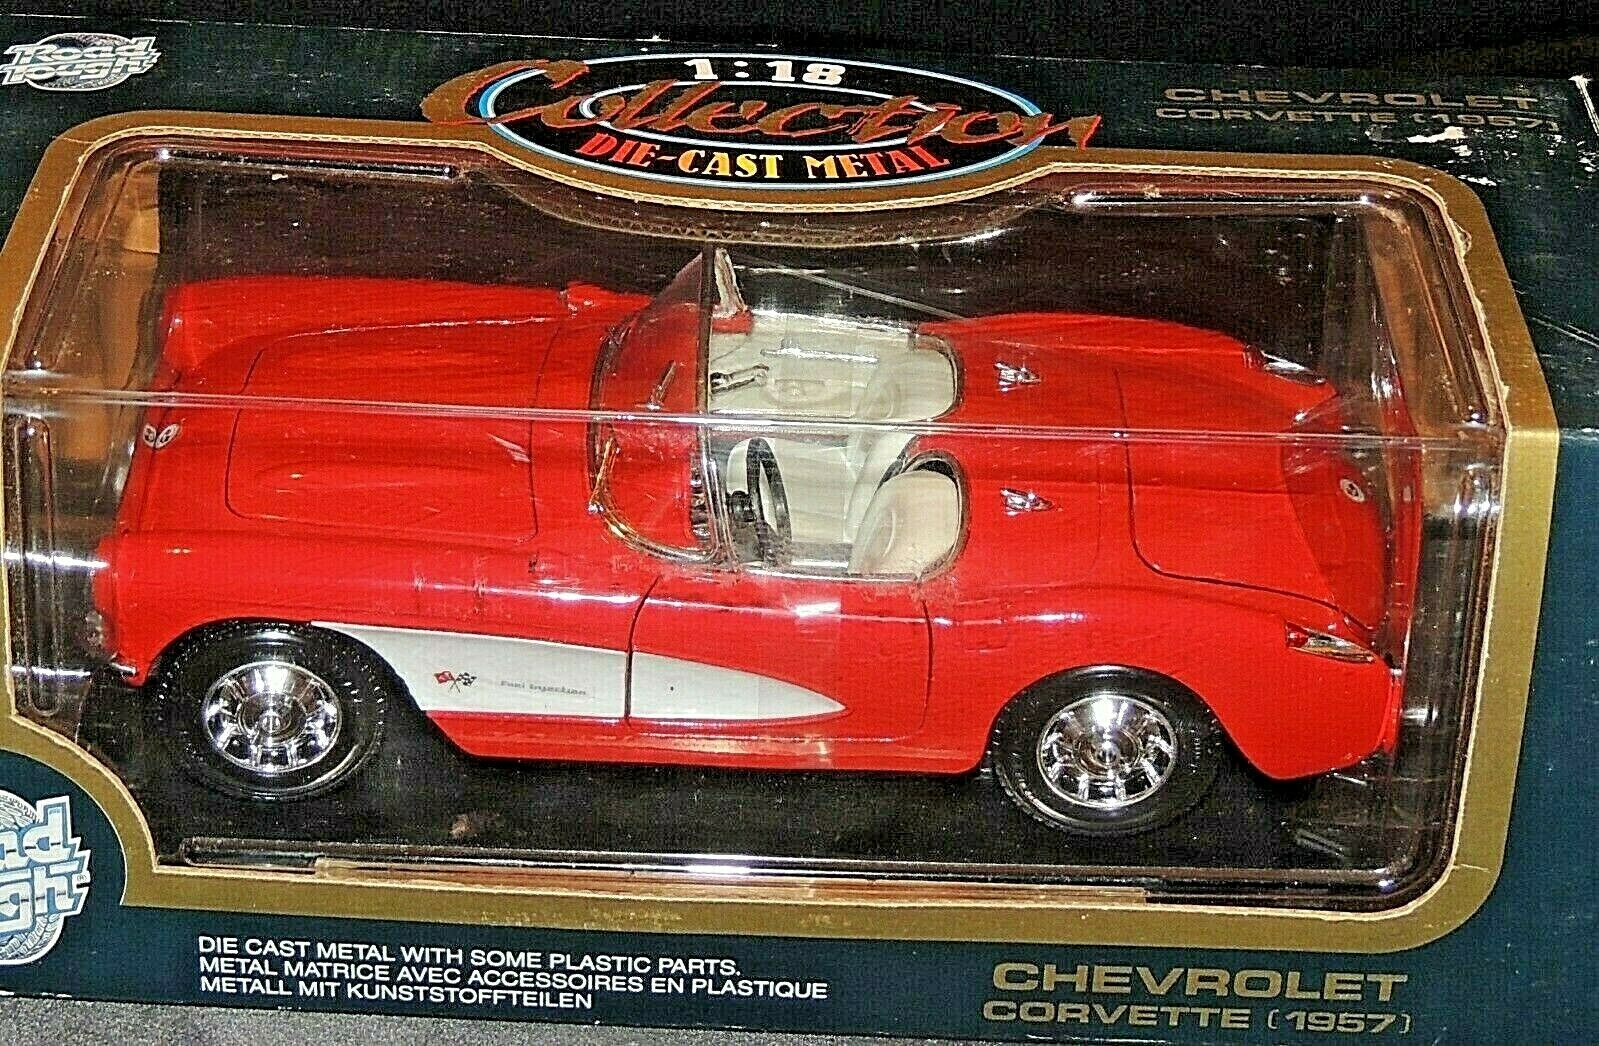 Bburago Diecast Vintage 1/24 1957 Corvette Convertible White & Red Cod —